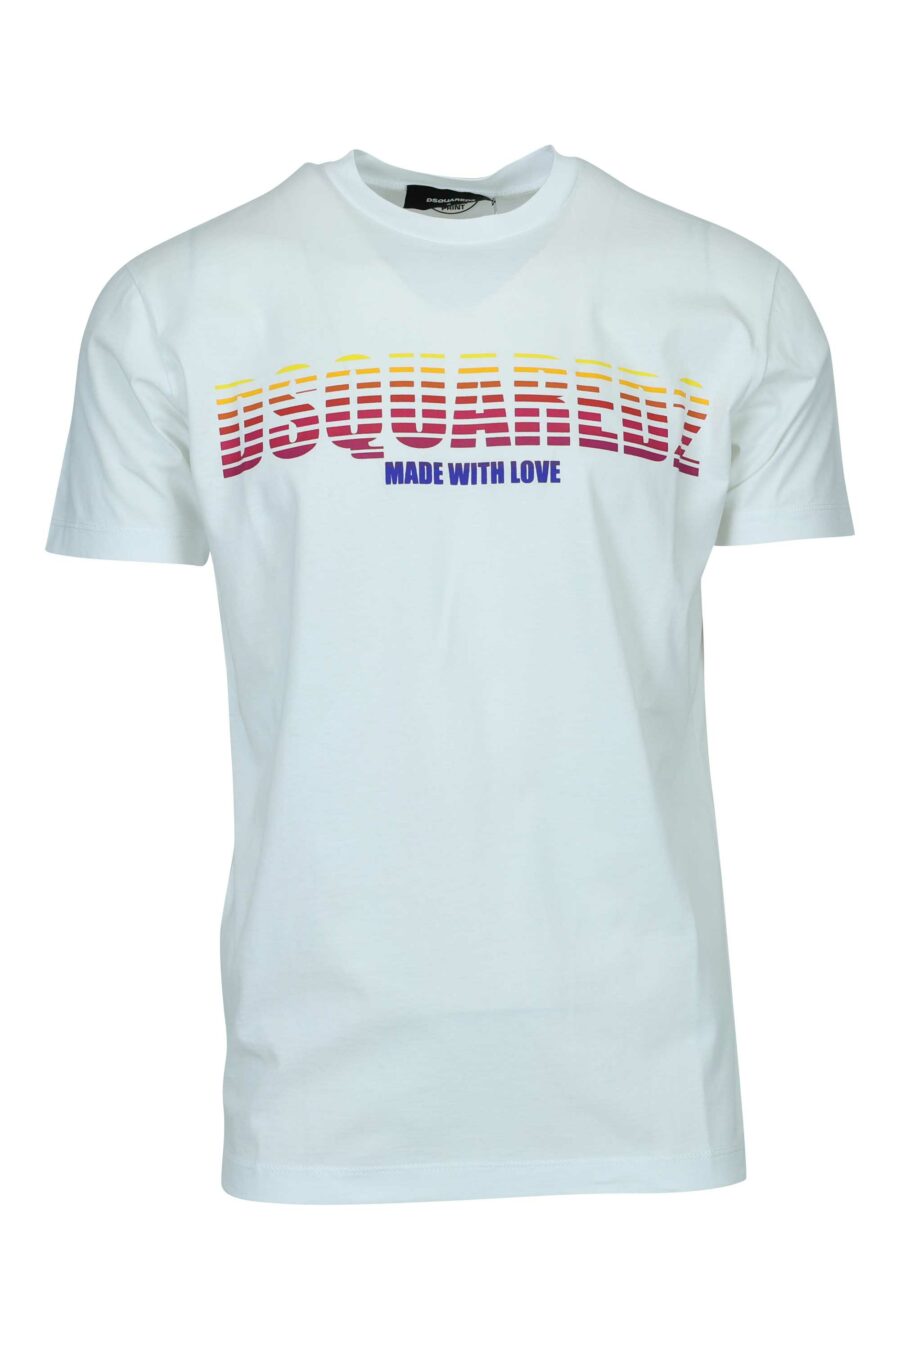 Weißes T-Shirt mit mehrfarbigem Retro-Maxilogo - 8054148447434 2